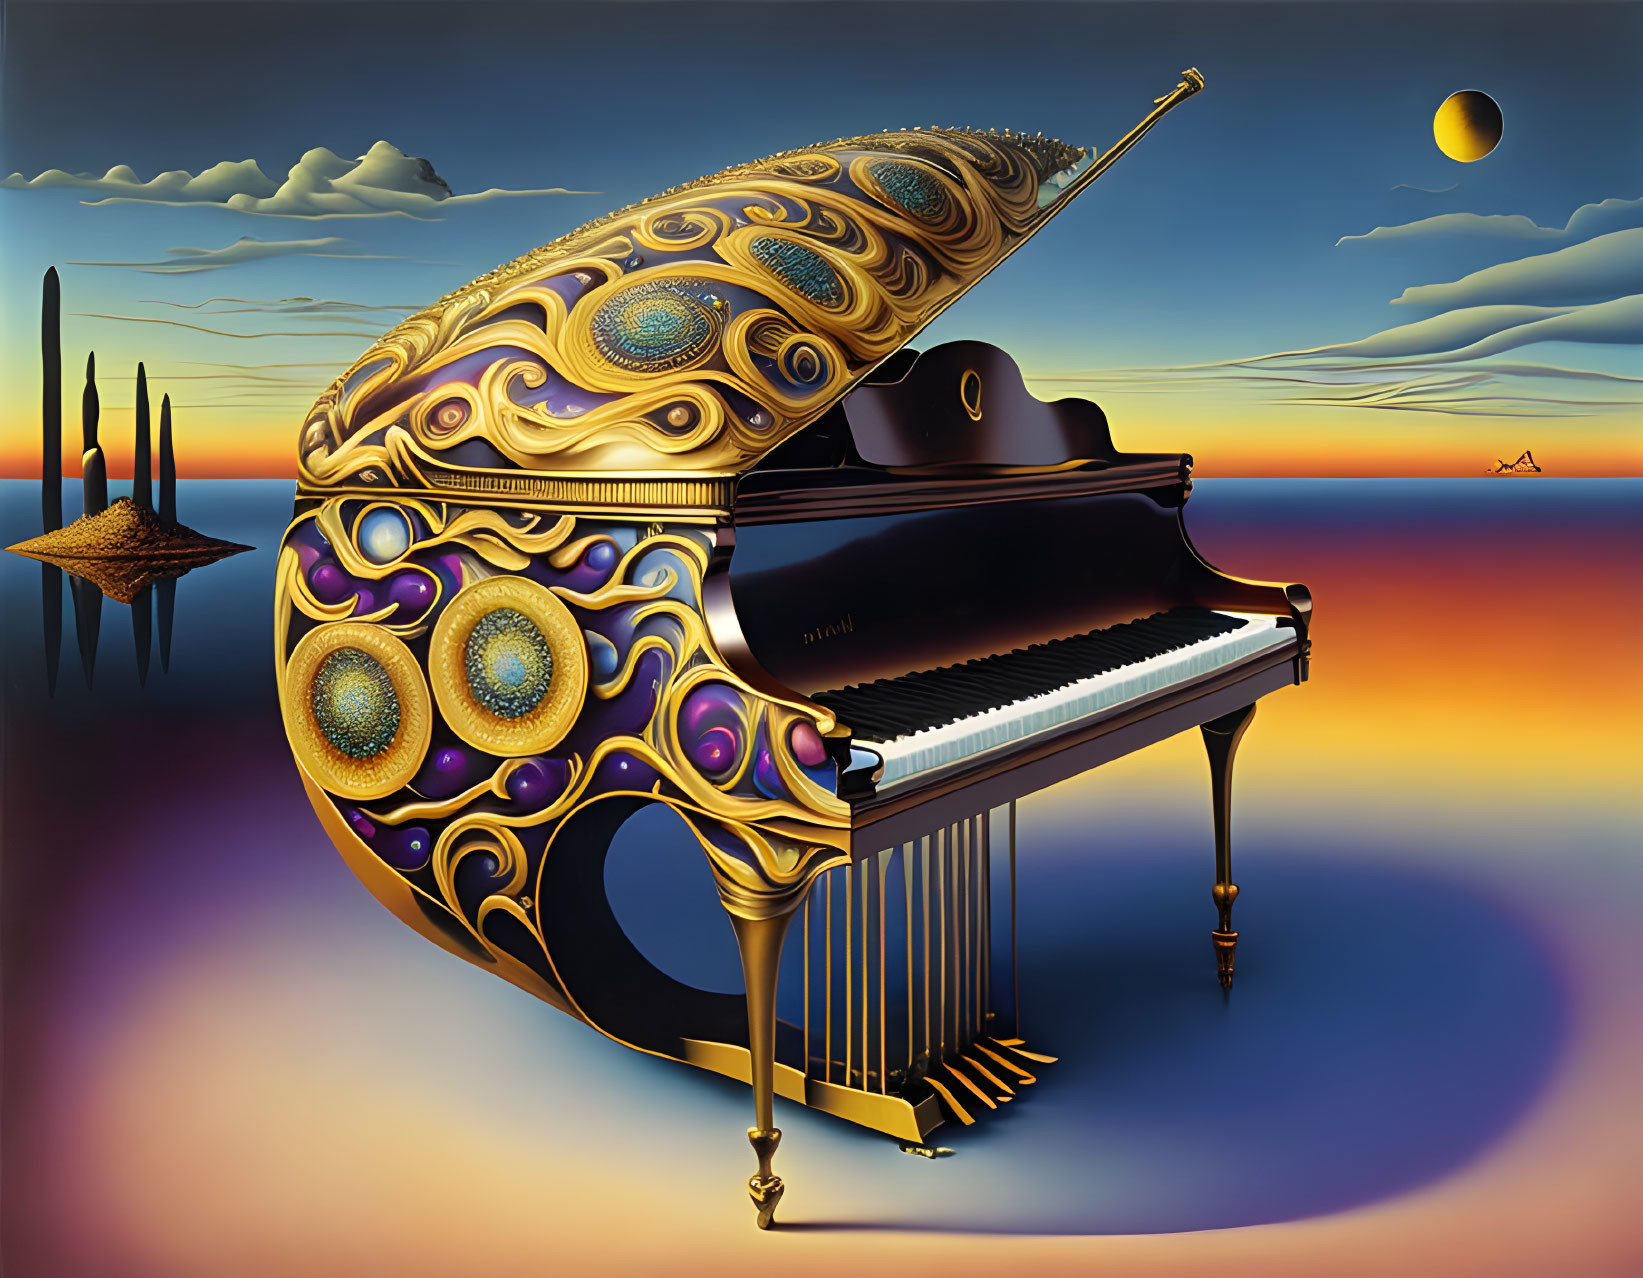  Piano by Salvador Dali